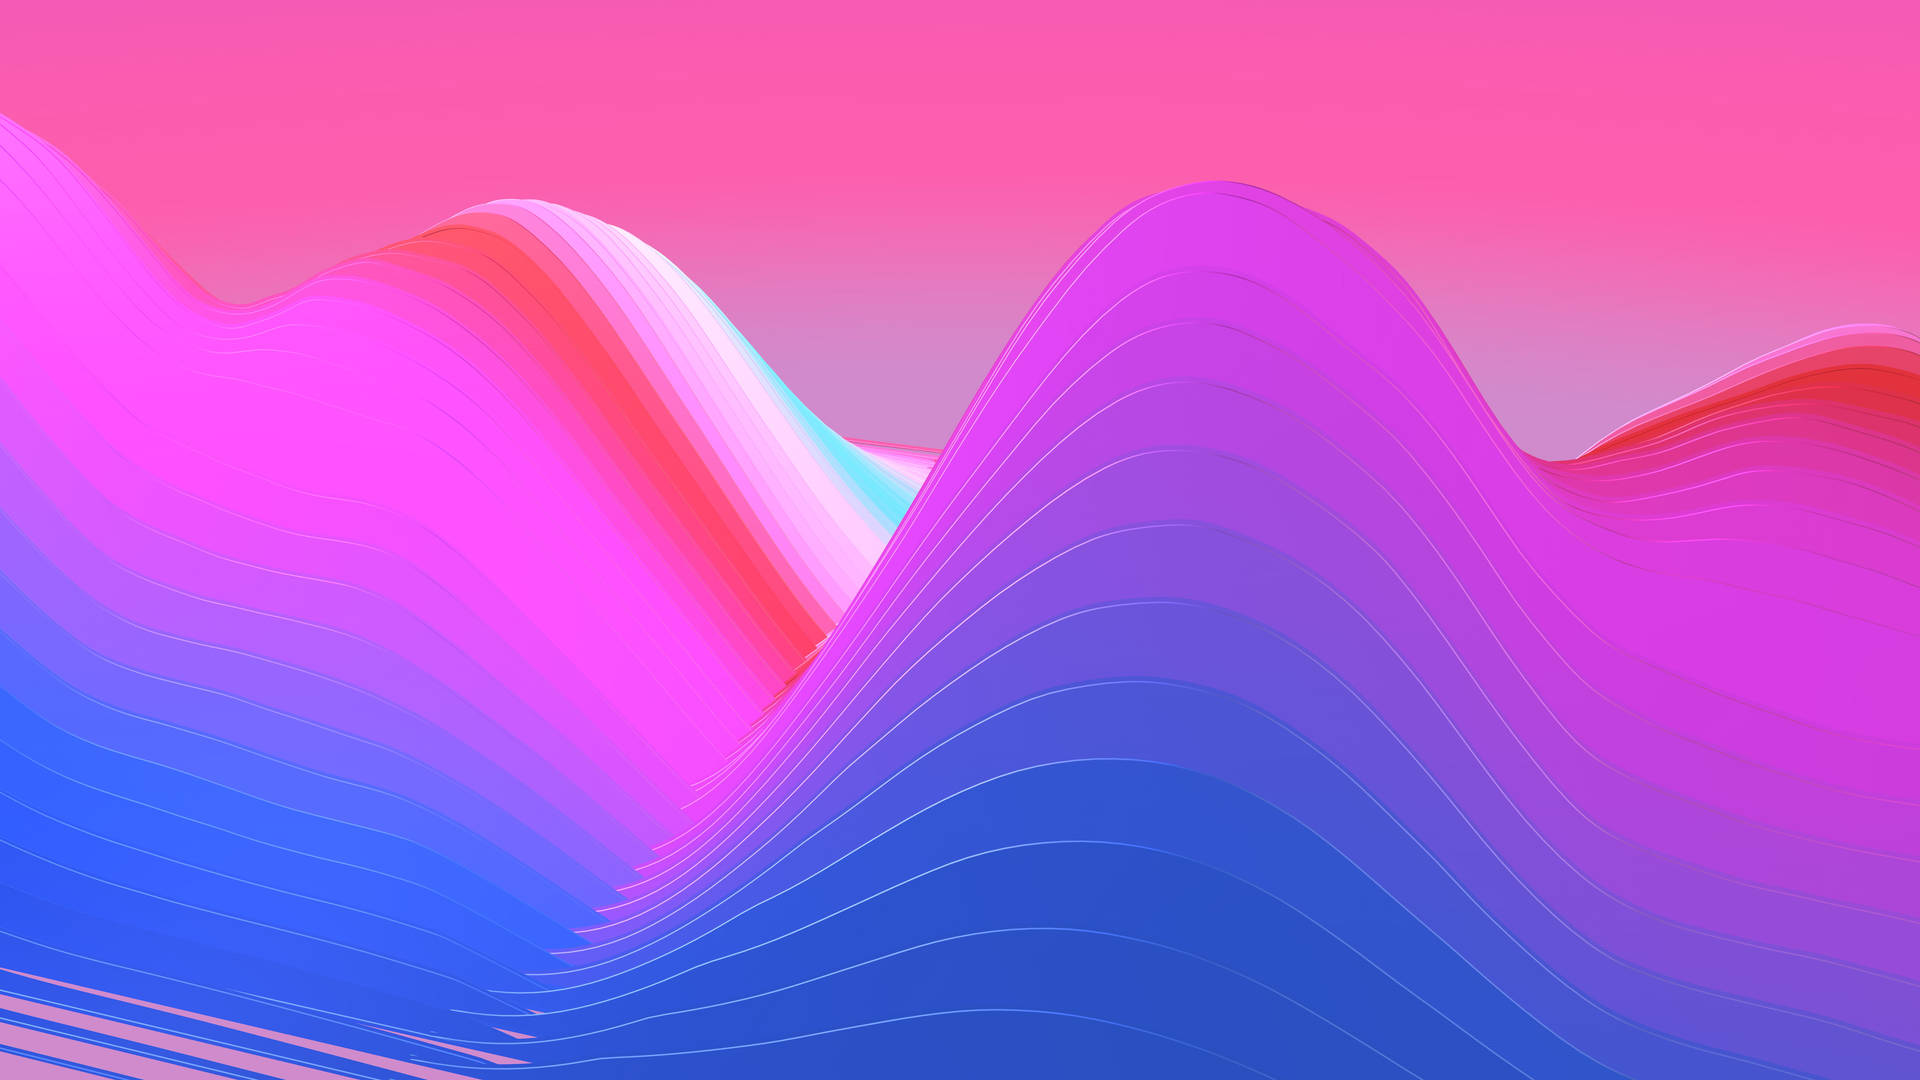 Caption: Vibrant Multicolored Waves On Iphone X Amoled Display